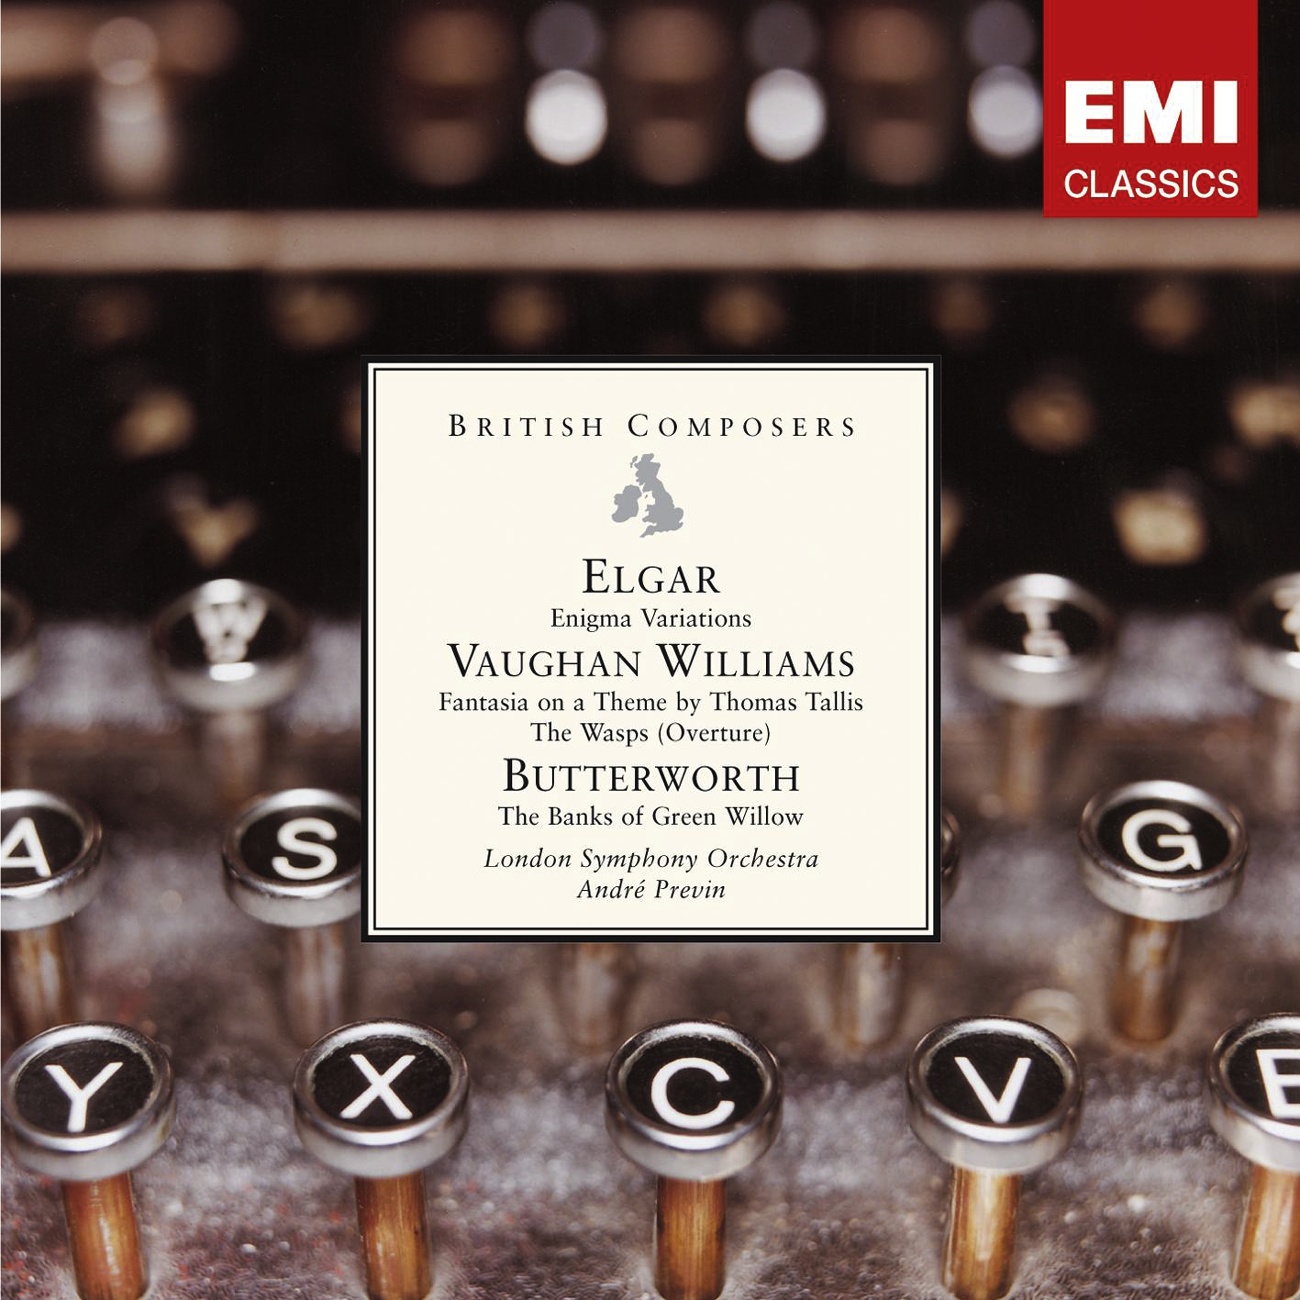 Variations on an Original Theme 'Enigma' Op. 36 (2007 Digital Remaster): XIV. Finale: E.D.U. (the composer) (Allegro)